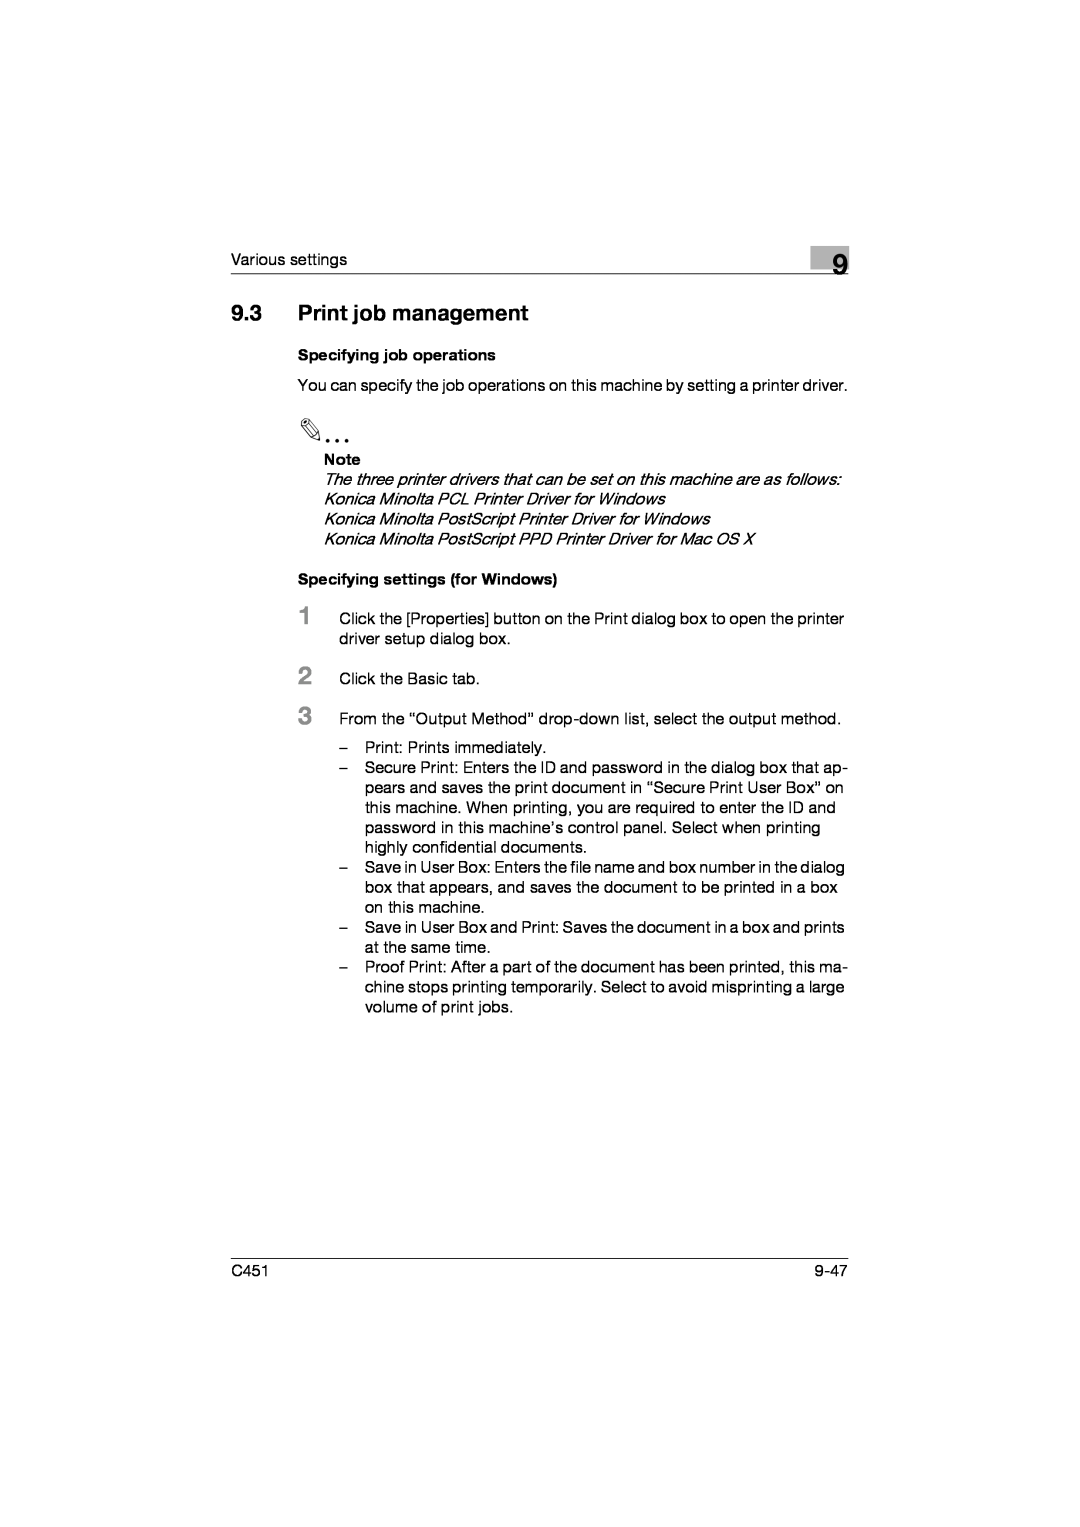 Konica Minolta C451 manual 9.3Print job management, Specifying job operations, Specifying settings for Windows 